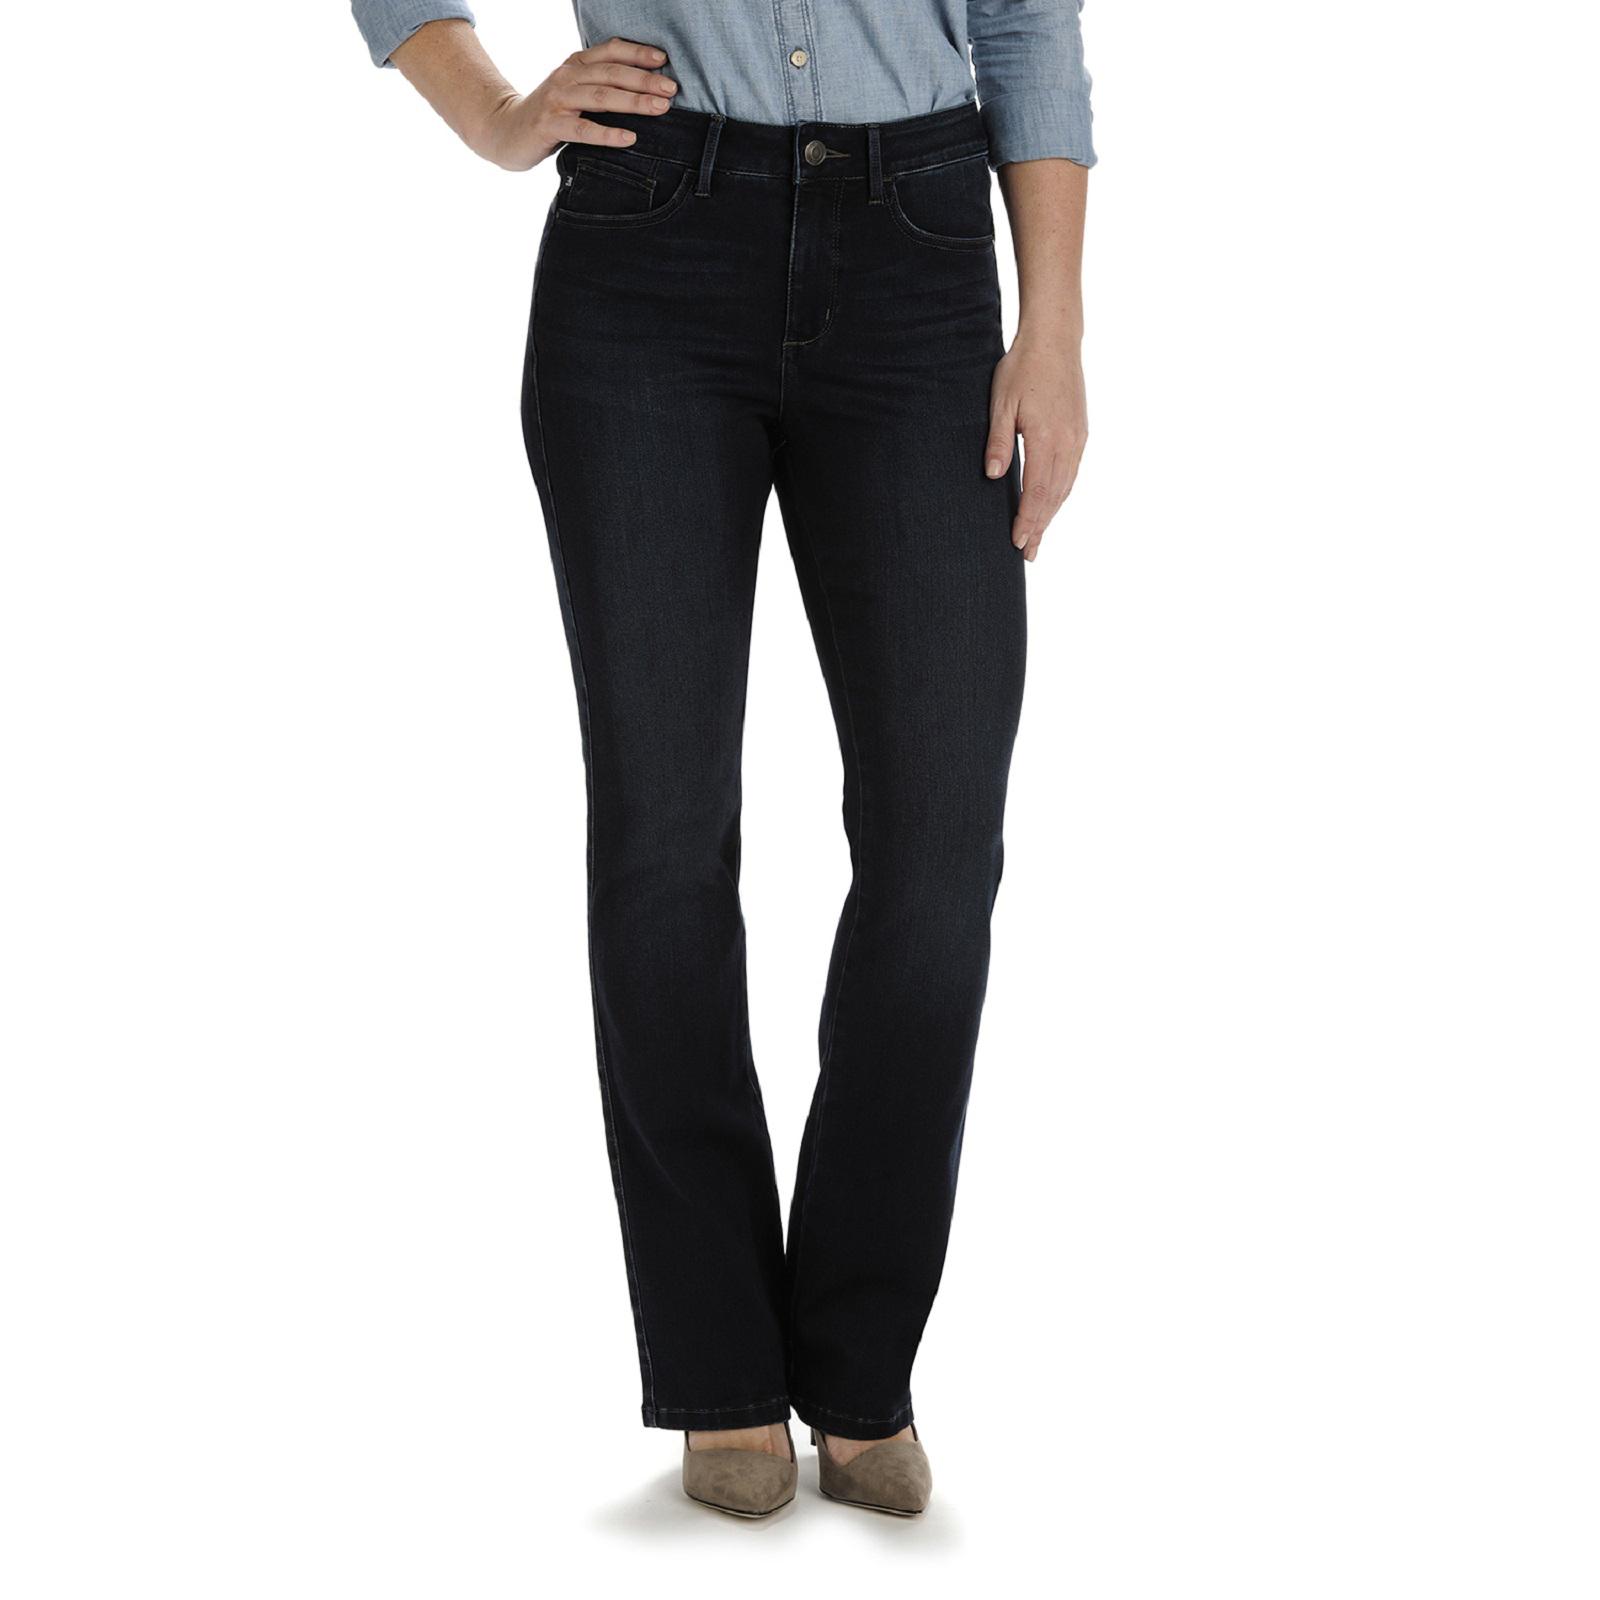 LEE Women's Easy Fit Bootcut Jeans